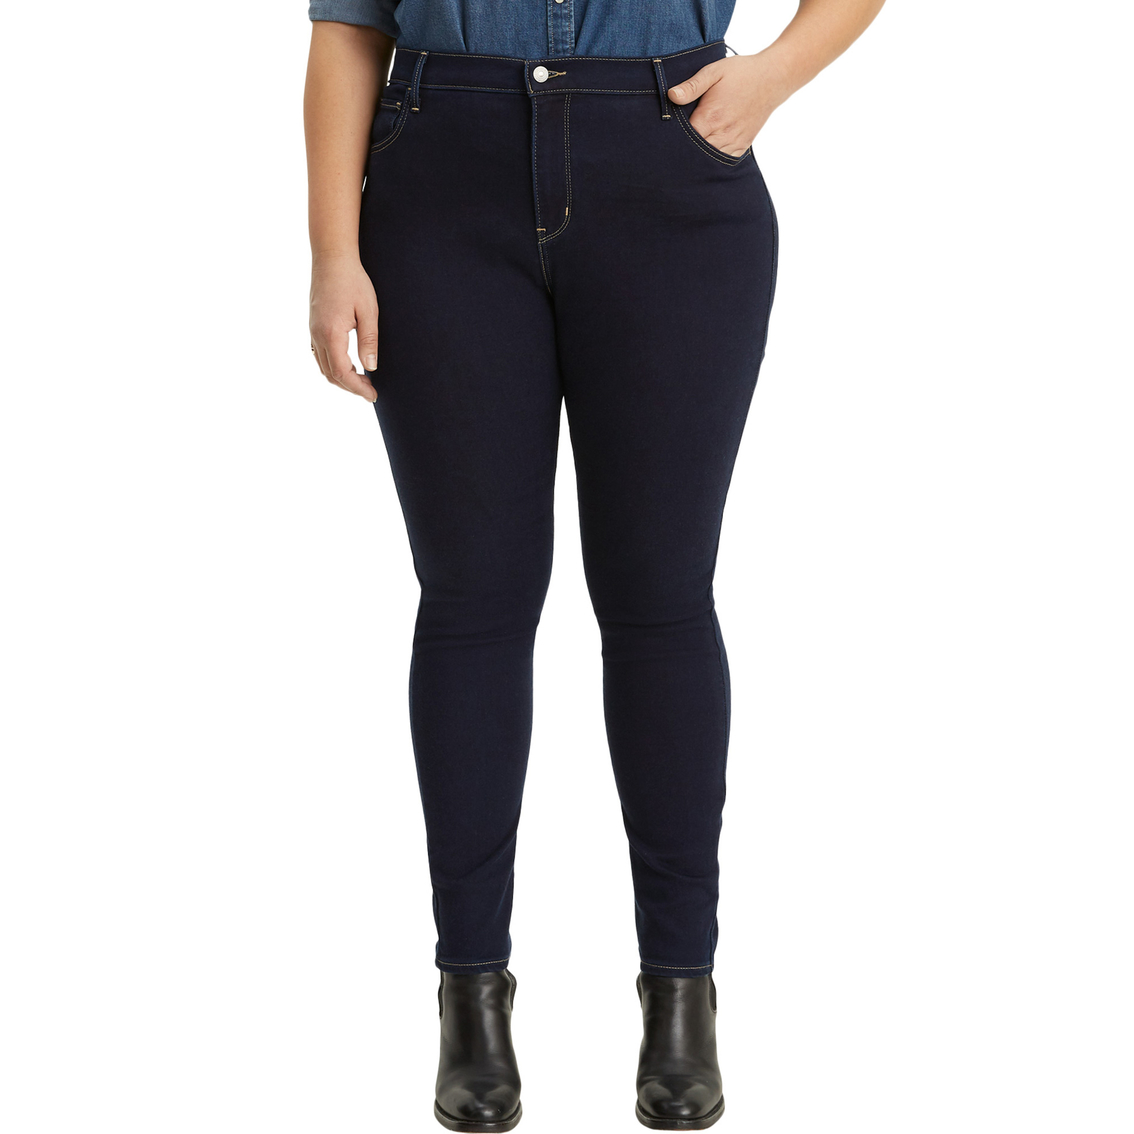 Levi's Plus Size 720 Hi Rise Super Skinny Jeans | Jeans | Clothing ...